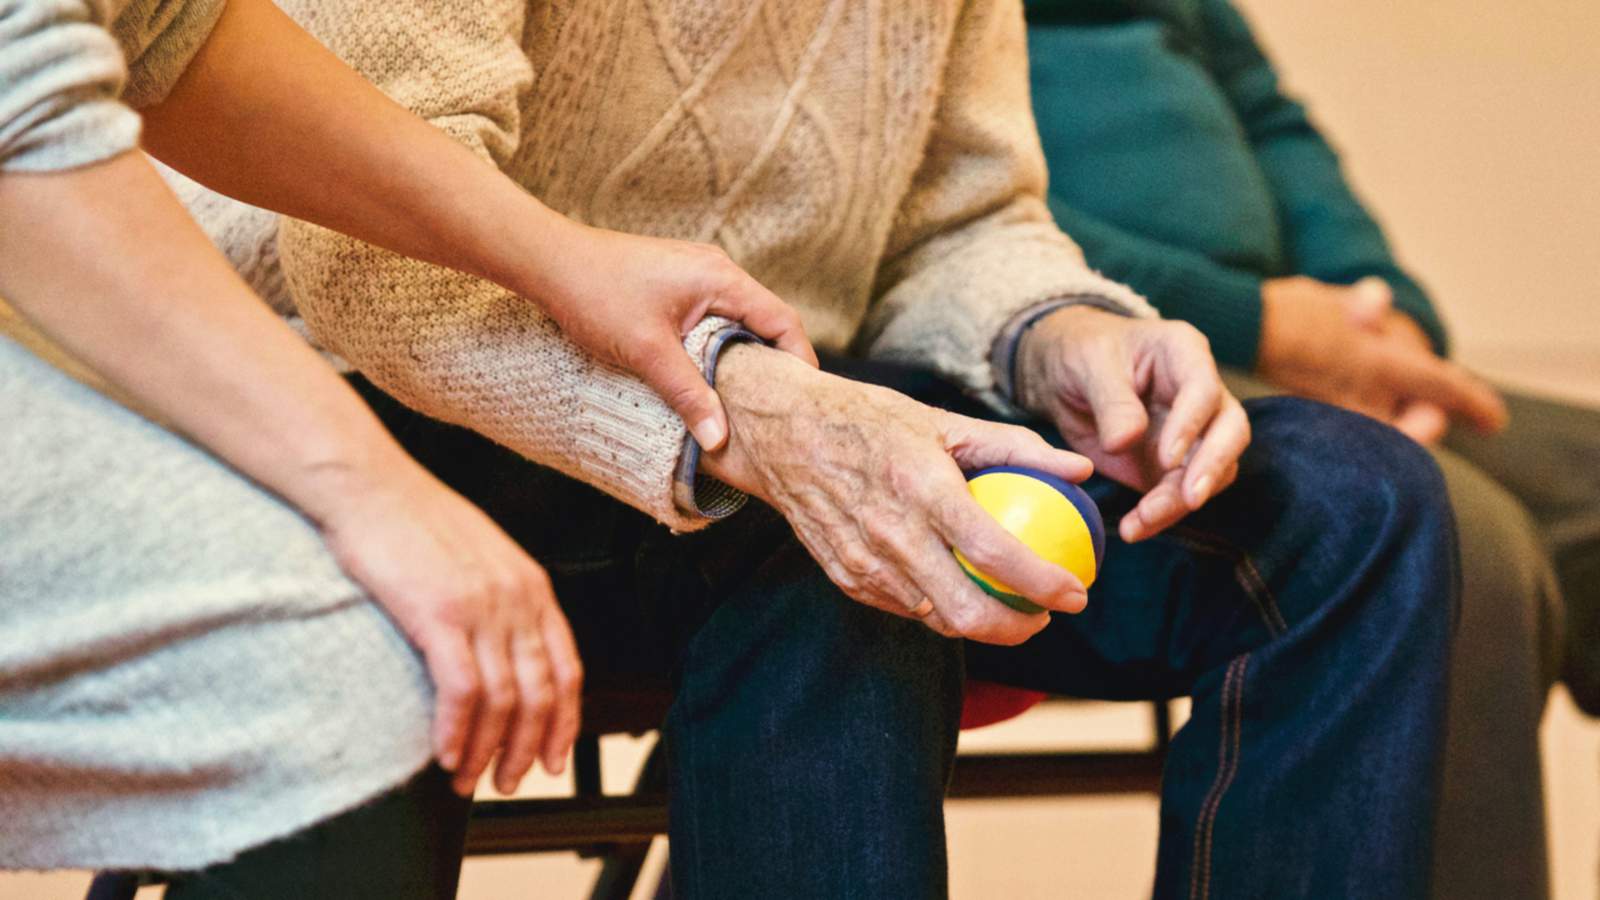 Panel mulls nursing home visits without testing